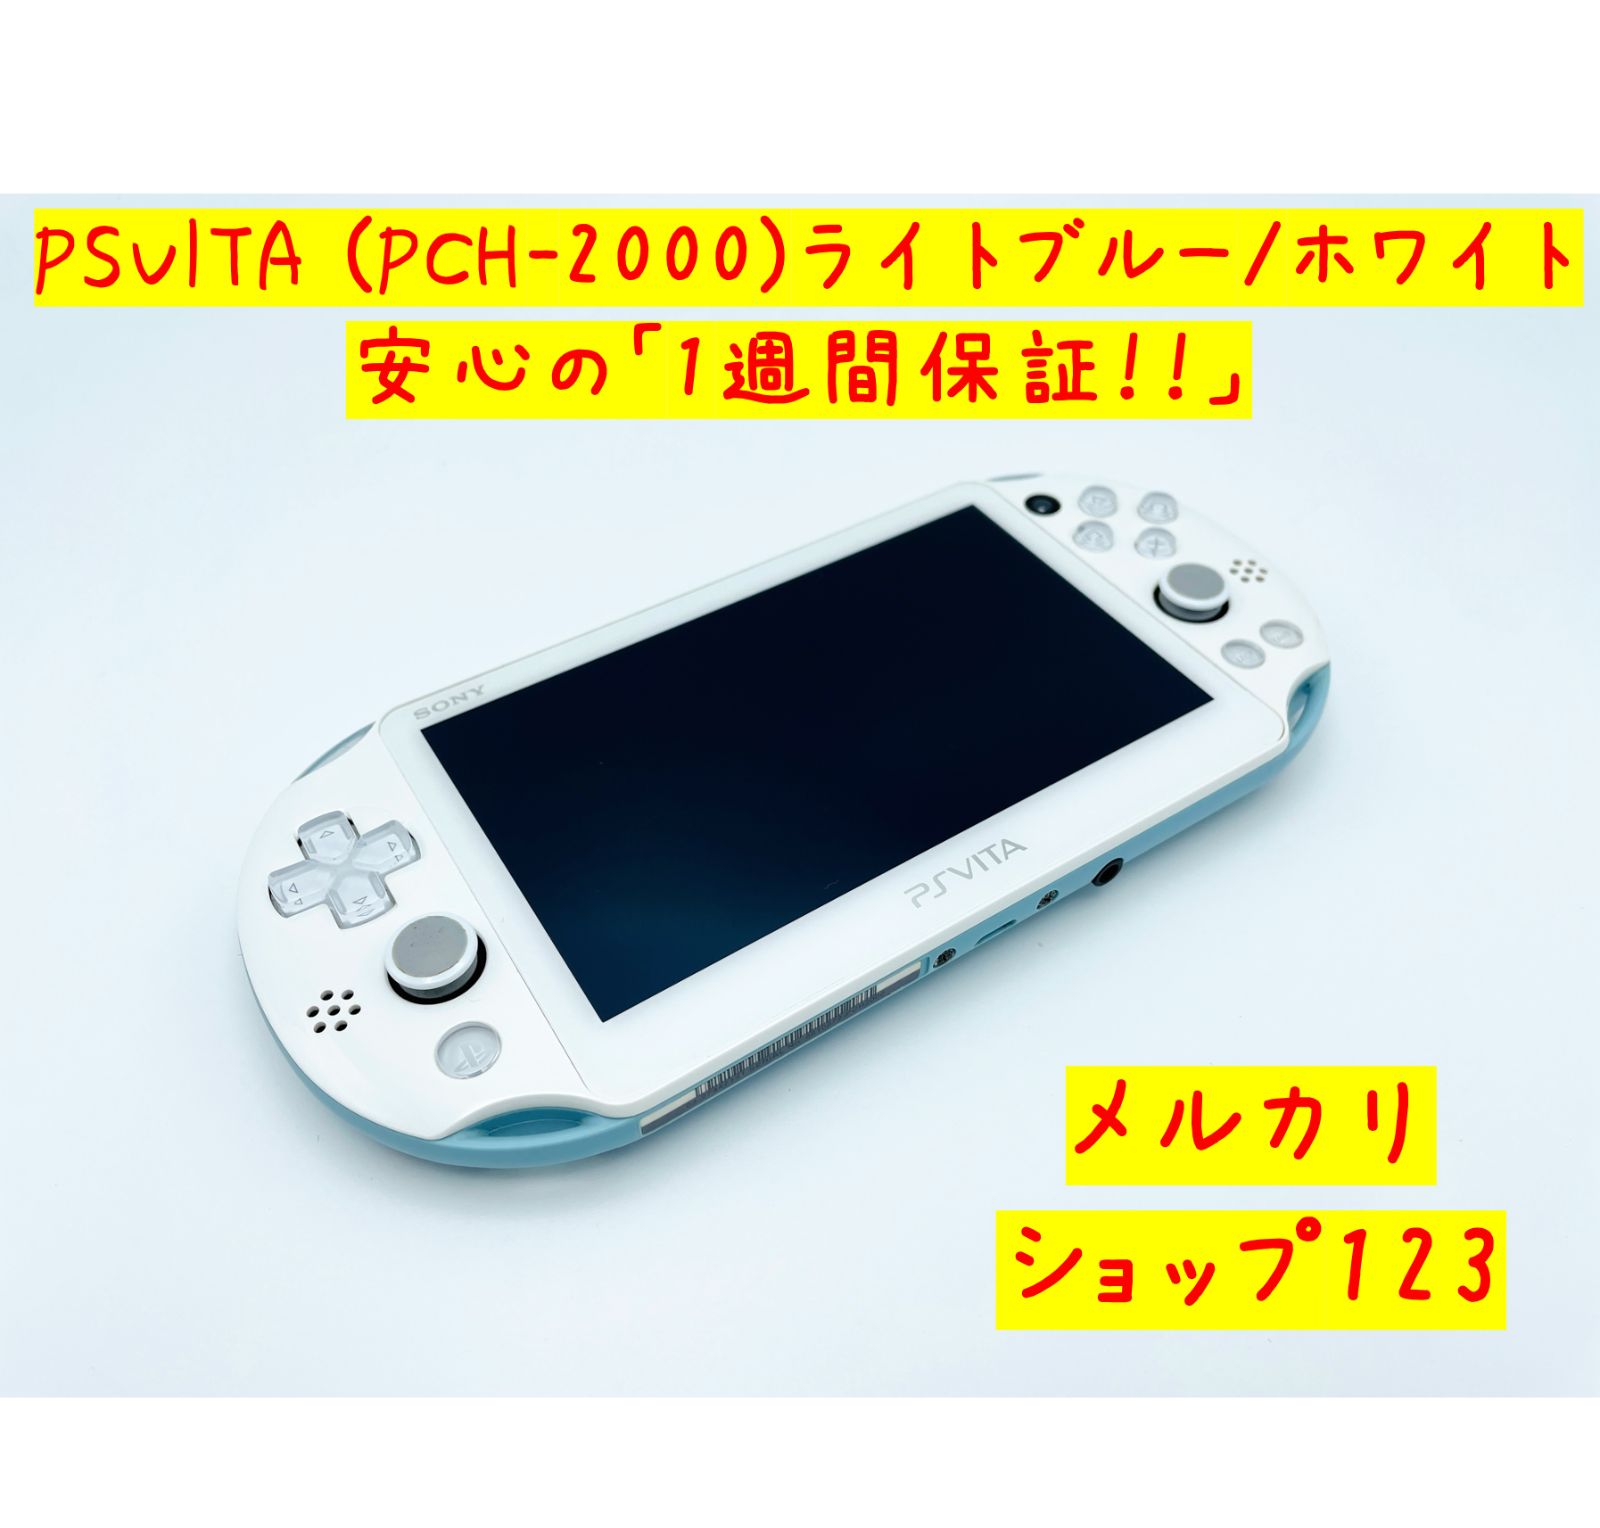 PSVITA 本体 Wi-Fiモデル ライトブルー/ホワイト PCH-2000 - 【イン